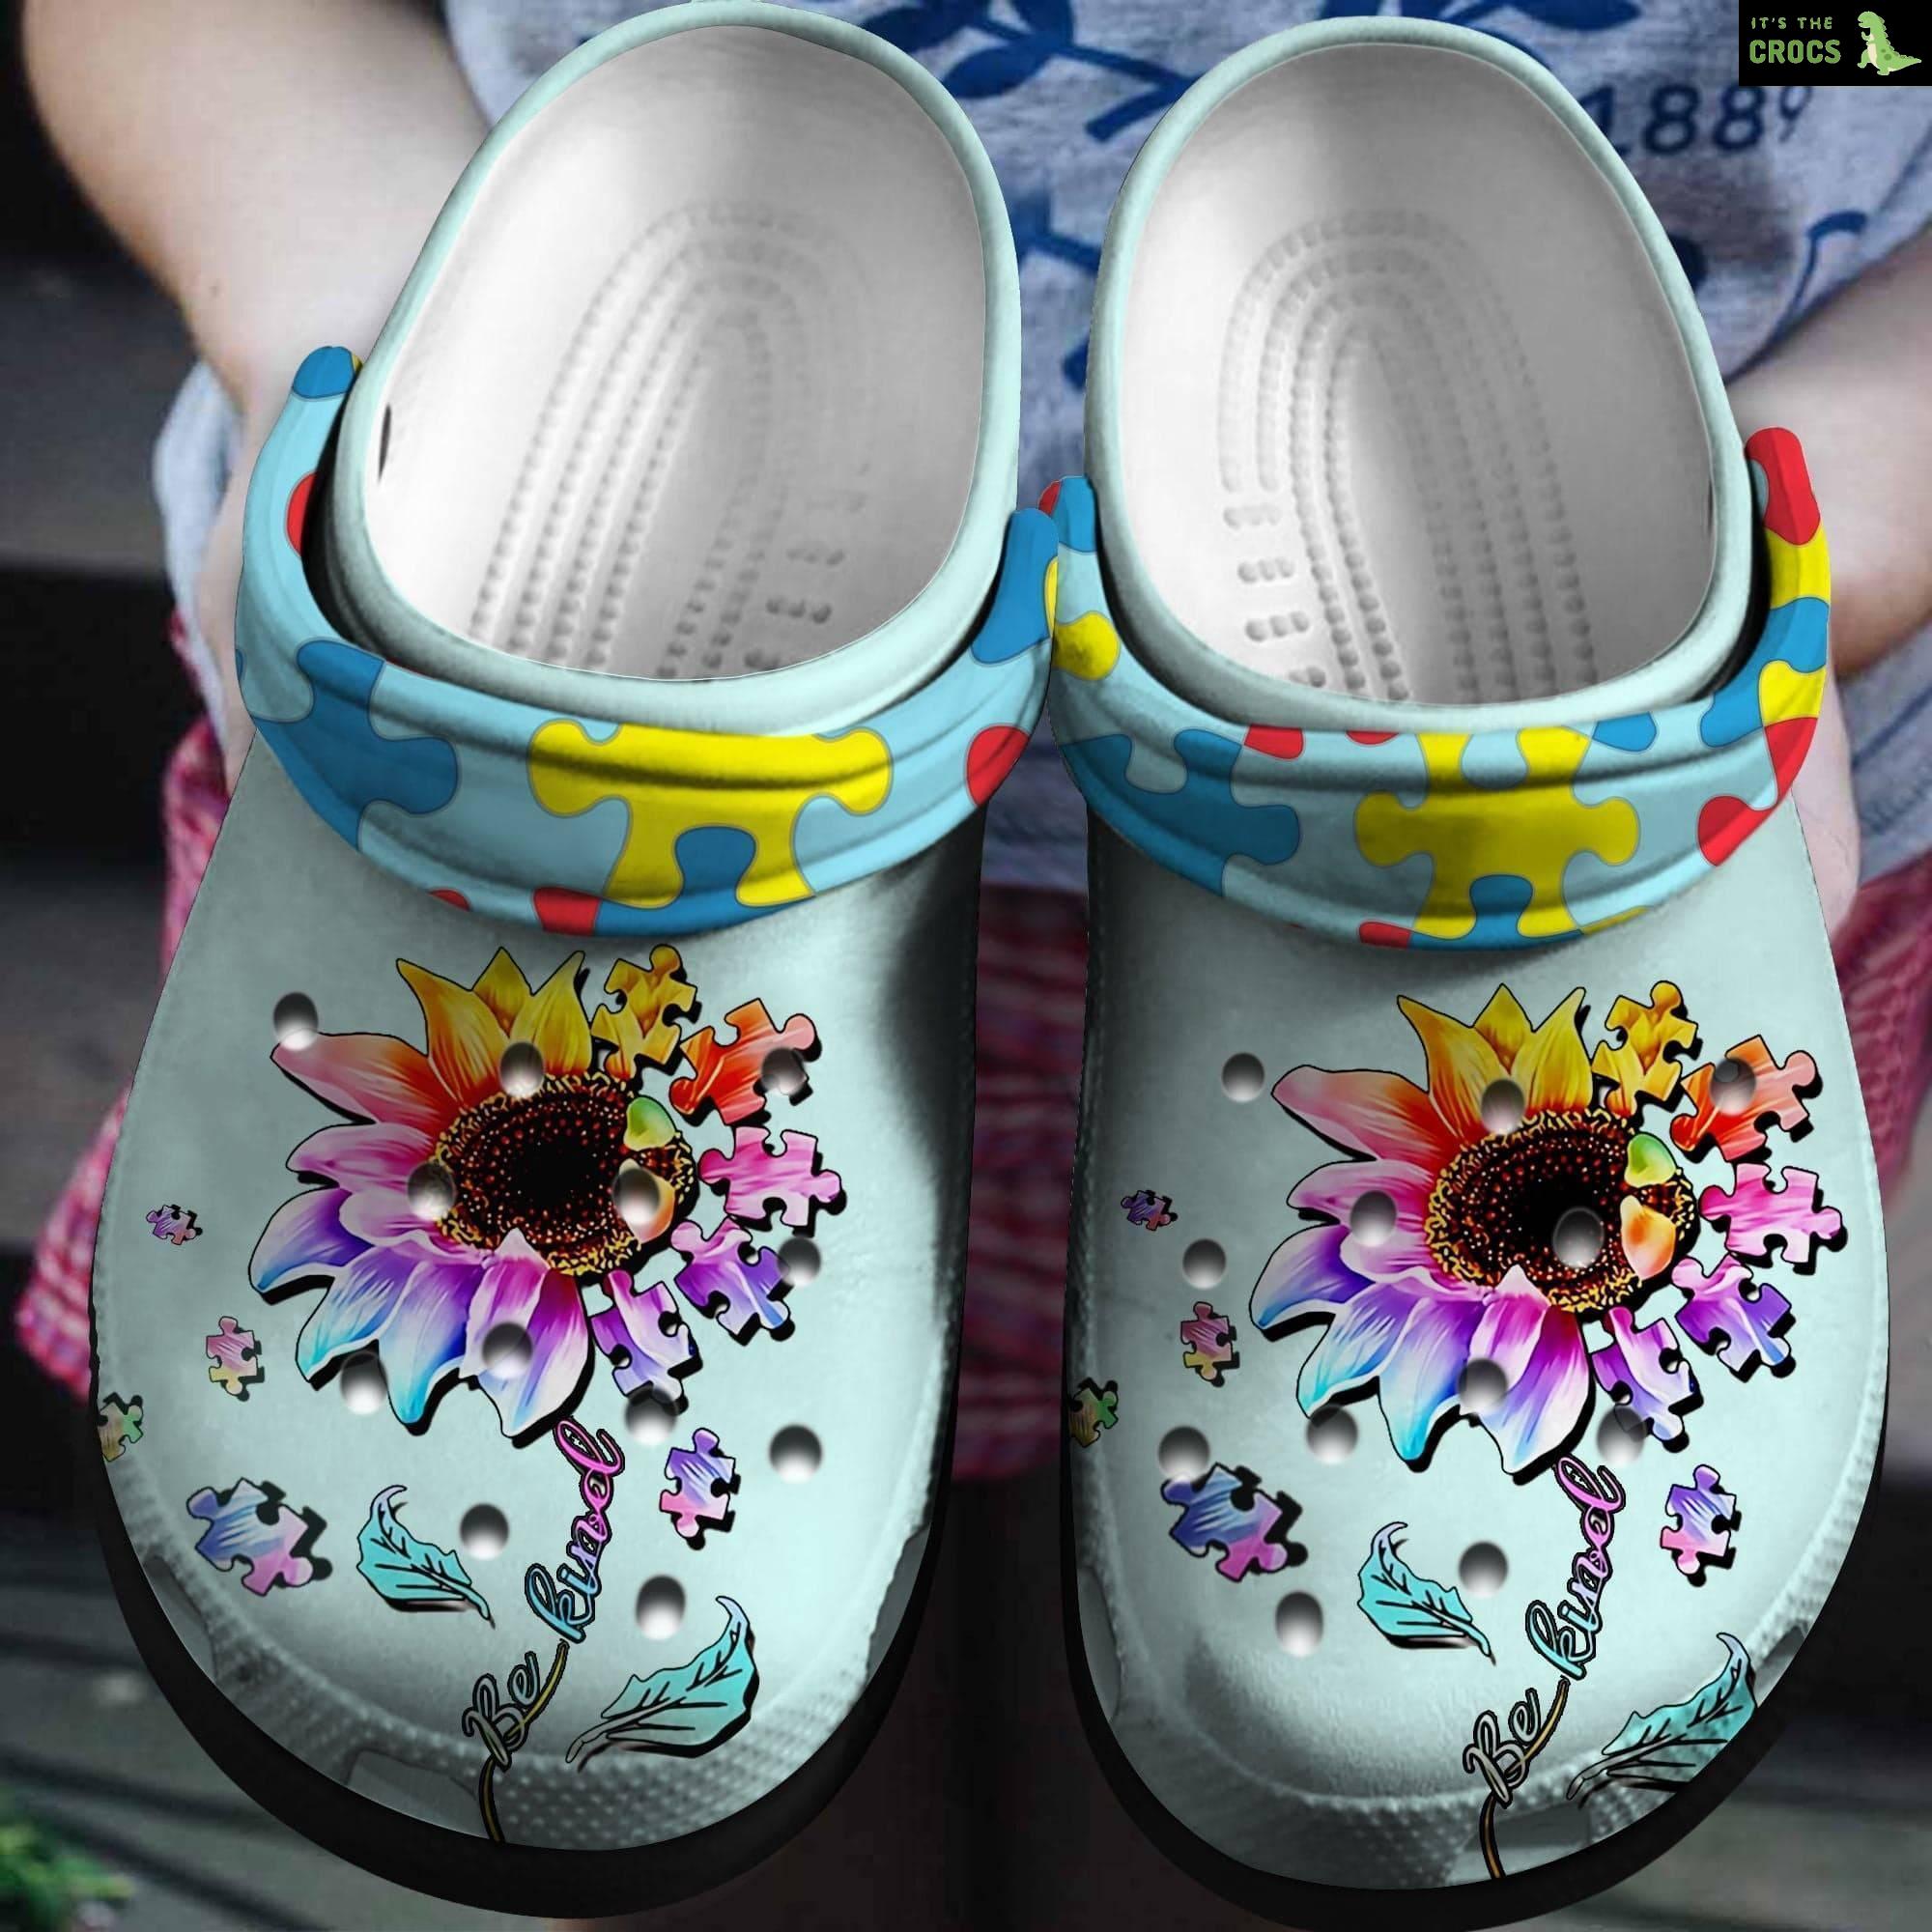 Autism Awareness Crocs Be Kind Sunflower Puzzle Crocband Clog Shoes For Men Women